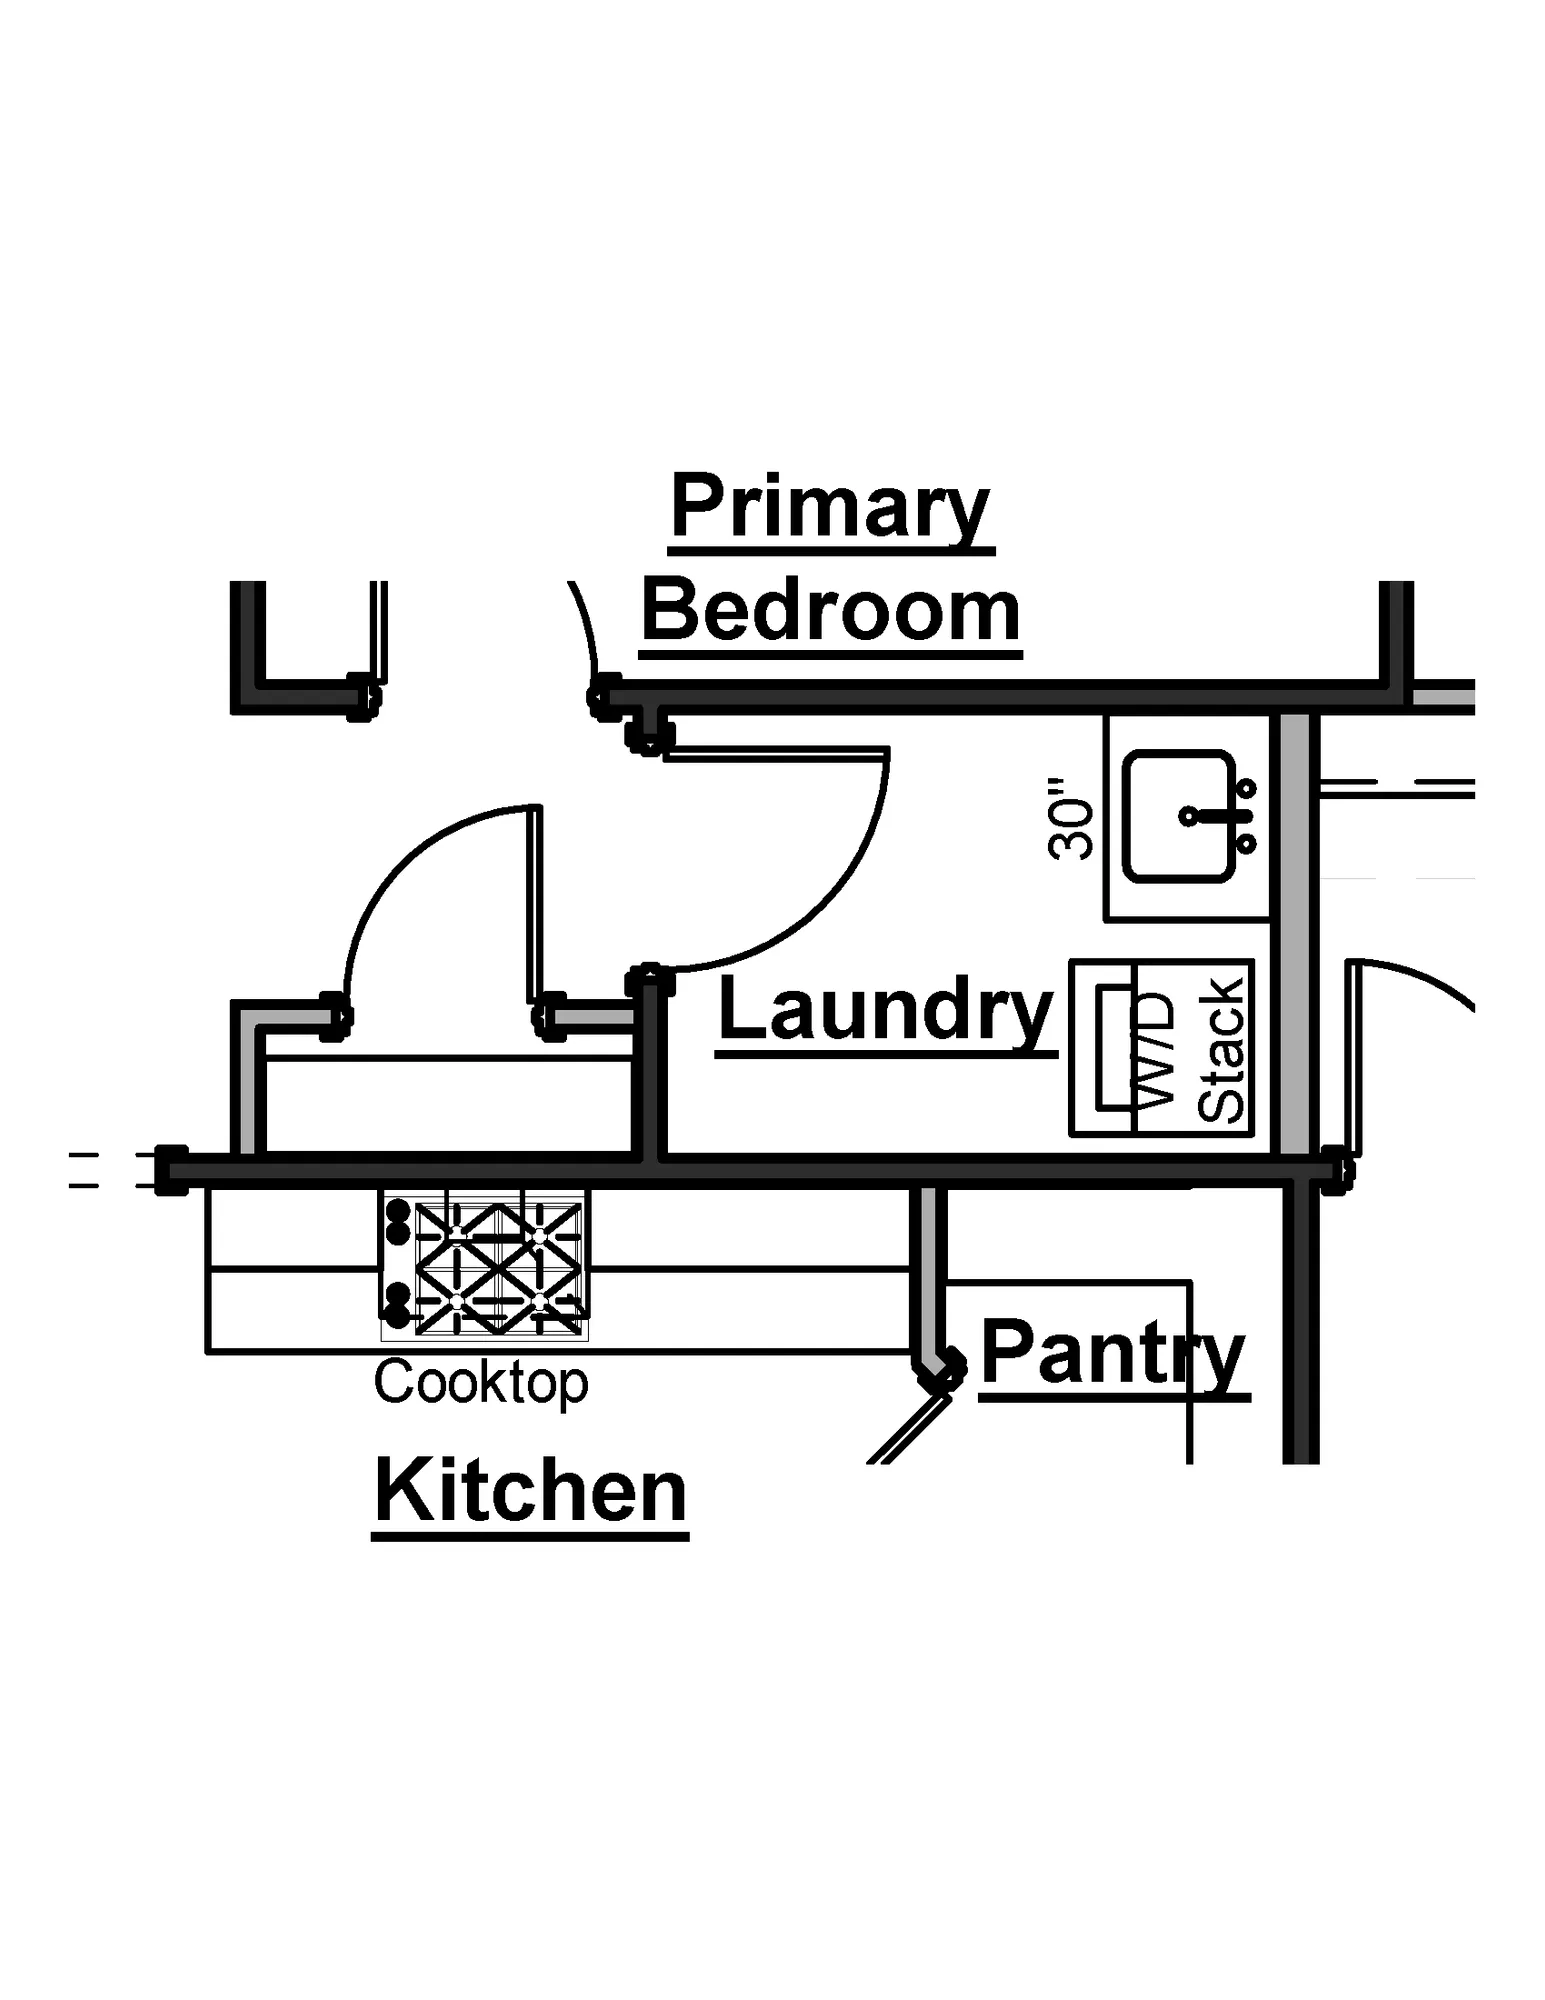 Laundry Sink Option Washer Dryer Stack - undefined